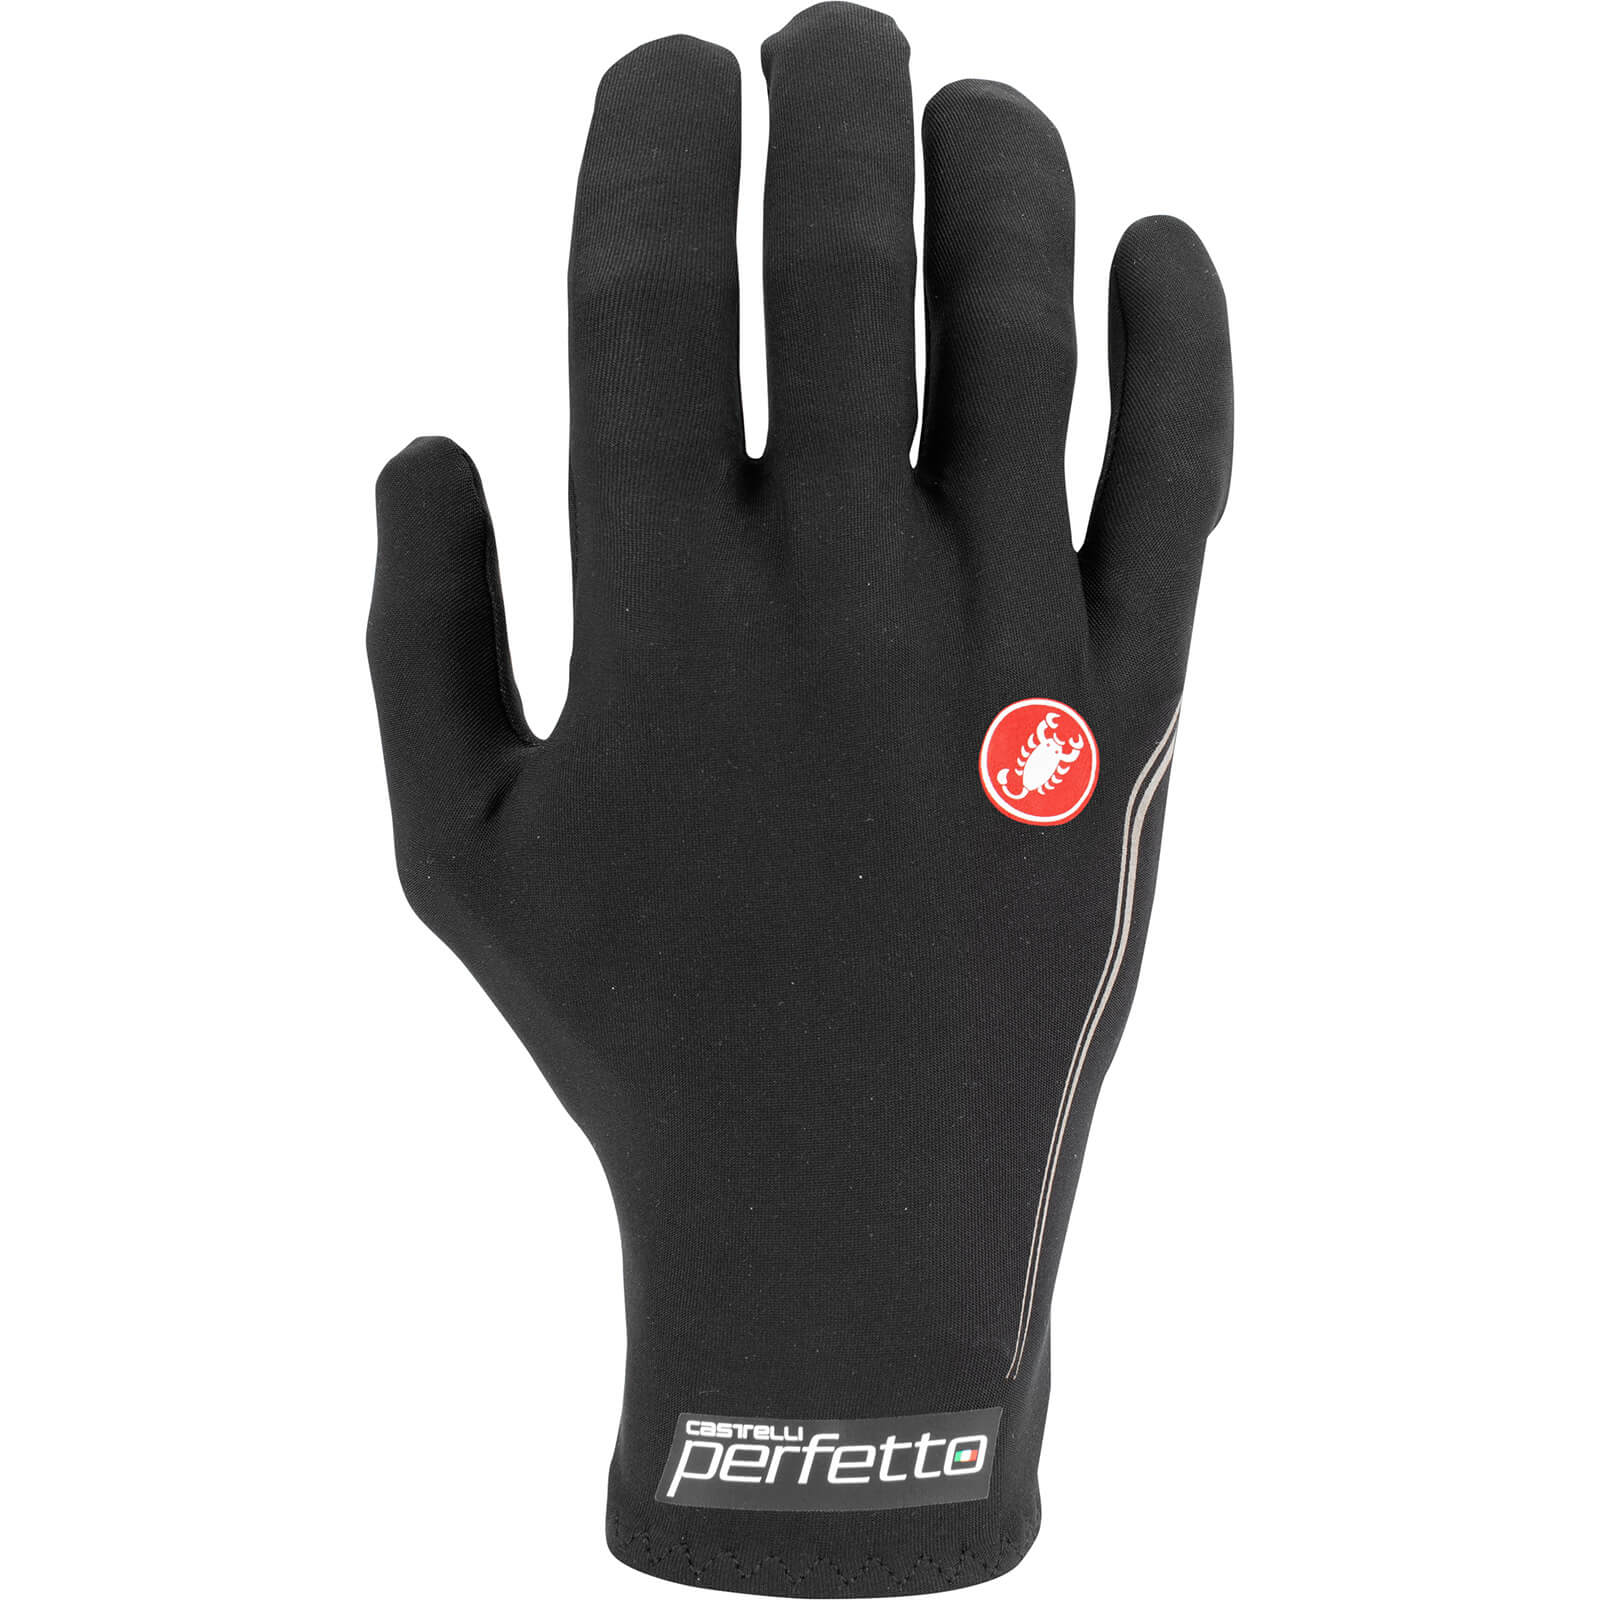 Castelli Perfetto Light Gloves - S